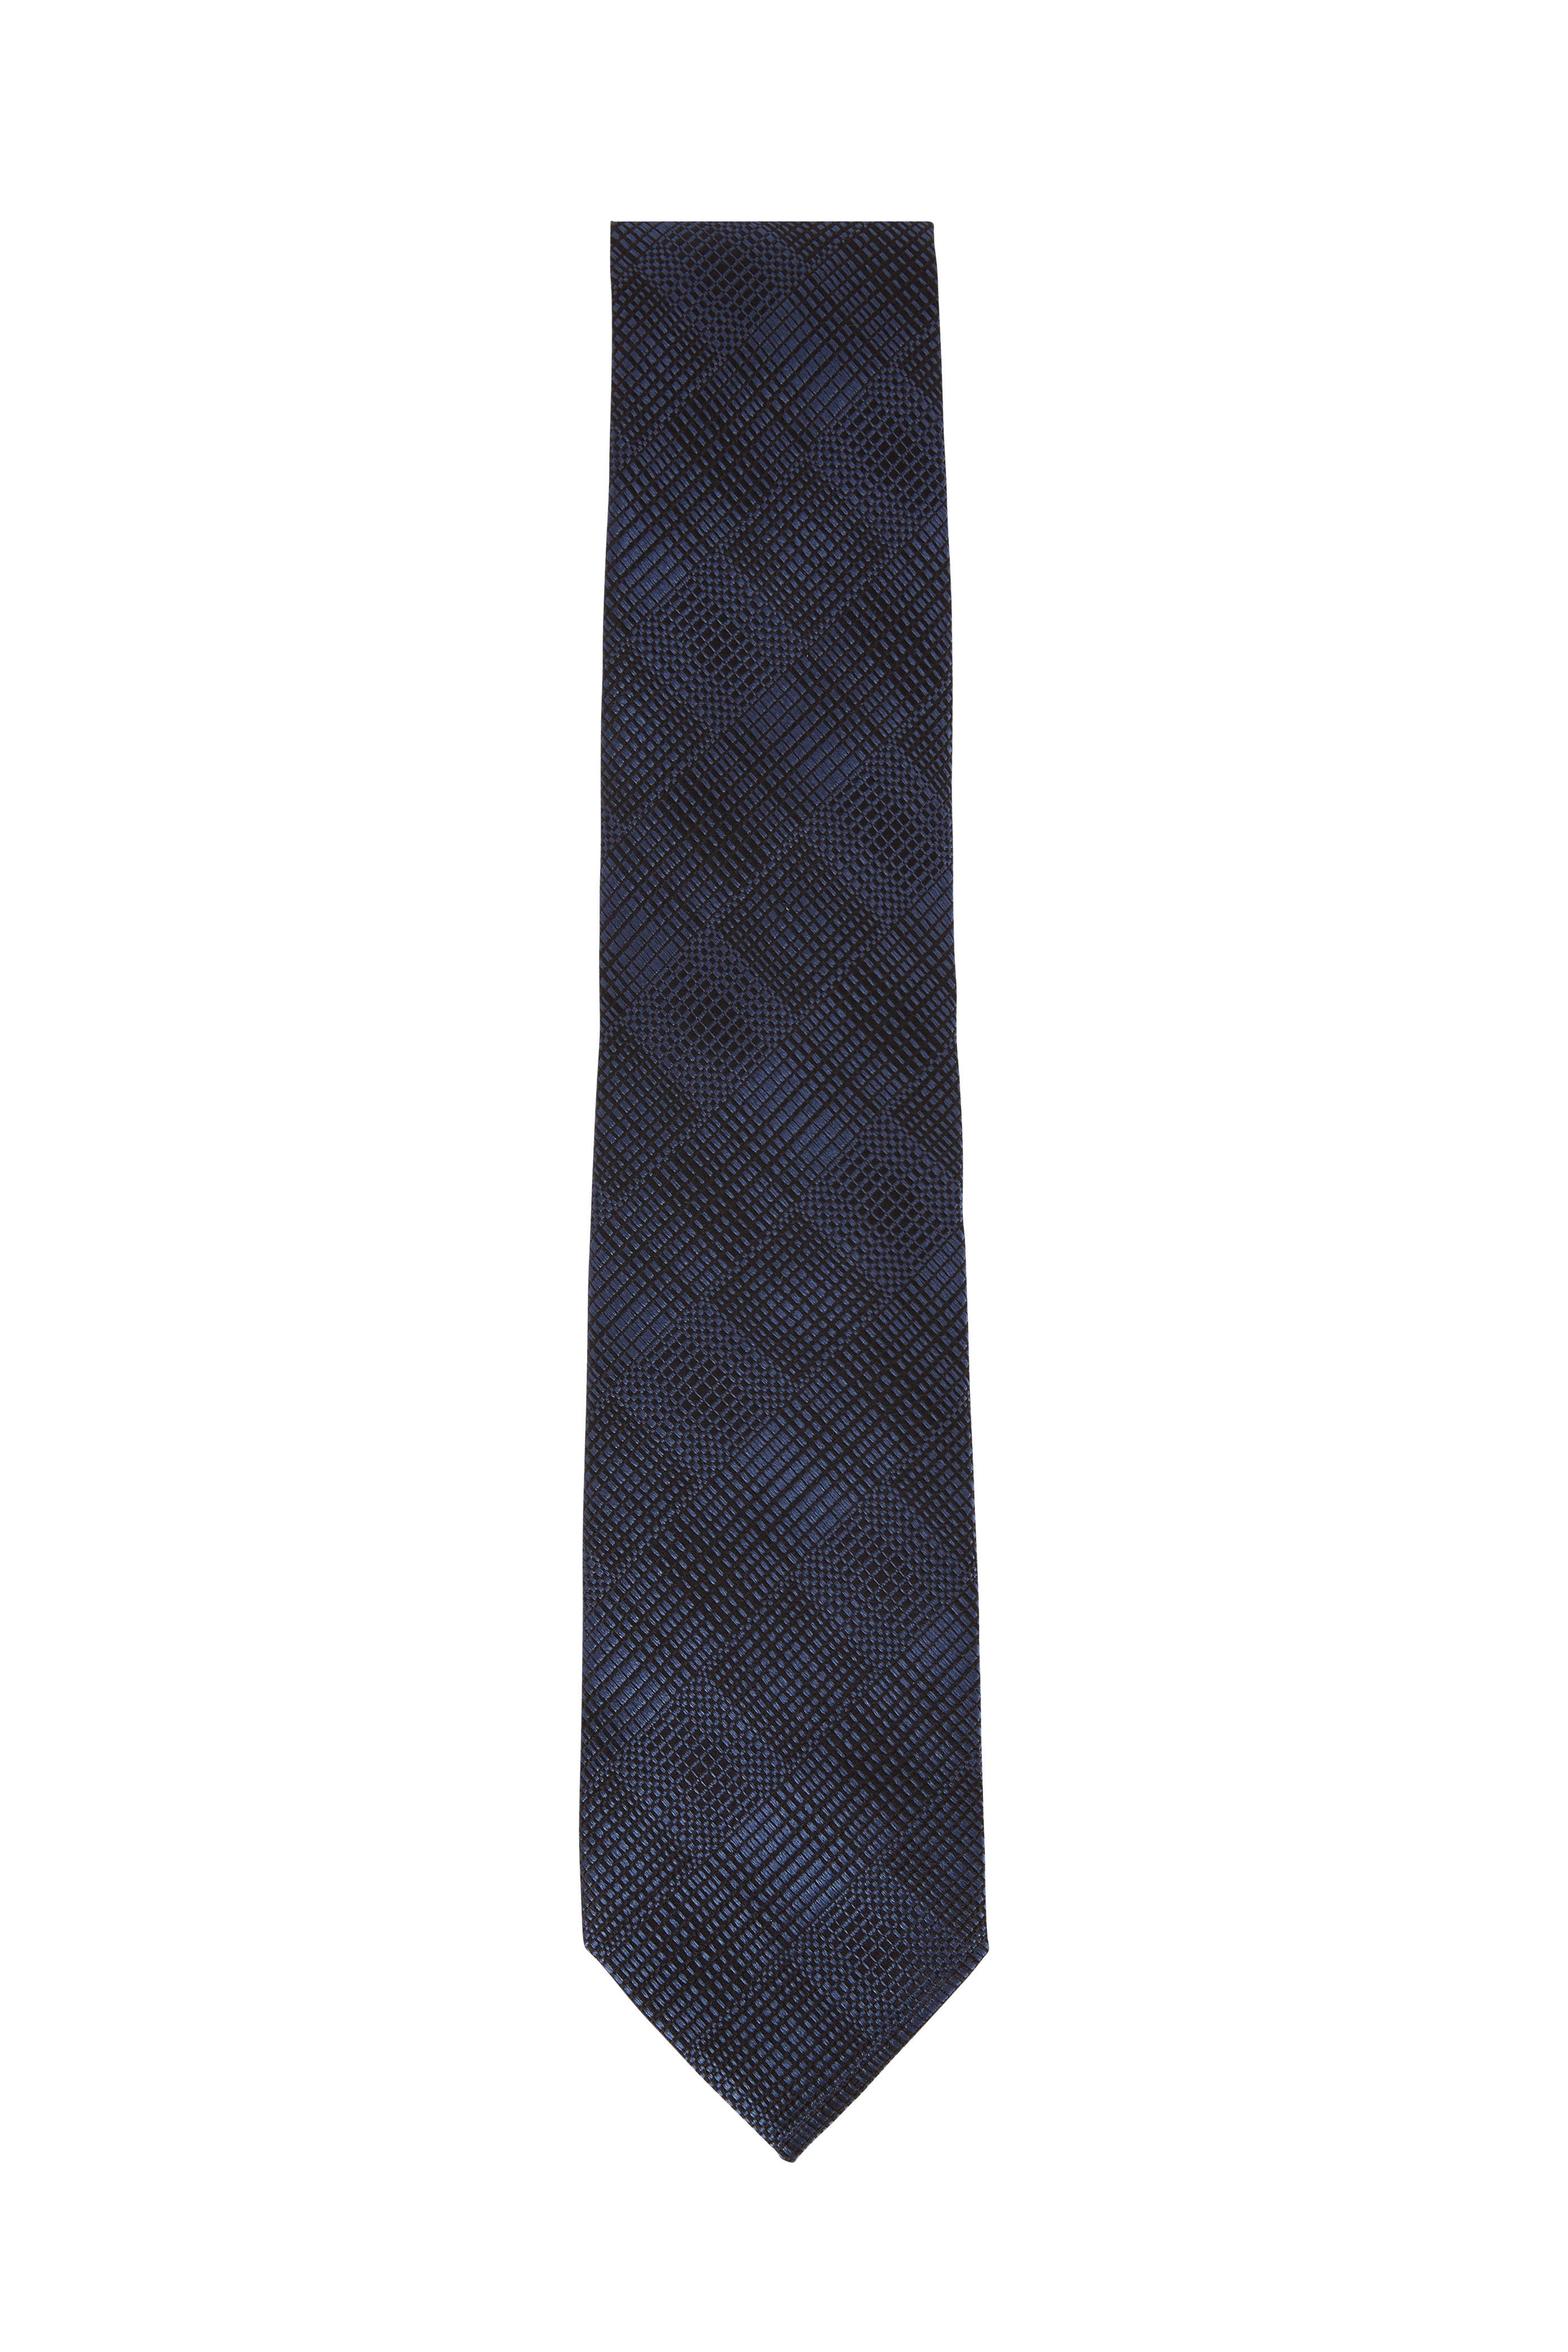 $250 NWT TOM FORD Navy Blue w/Self Satin stripes mens 3.75" woven Silk tie ITALY 